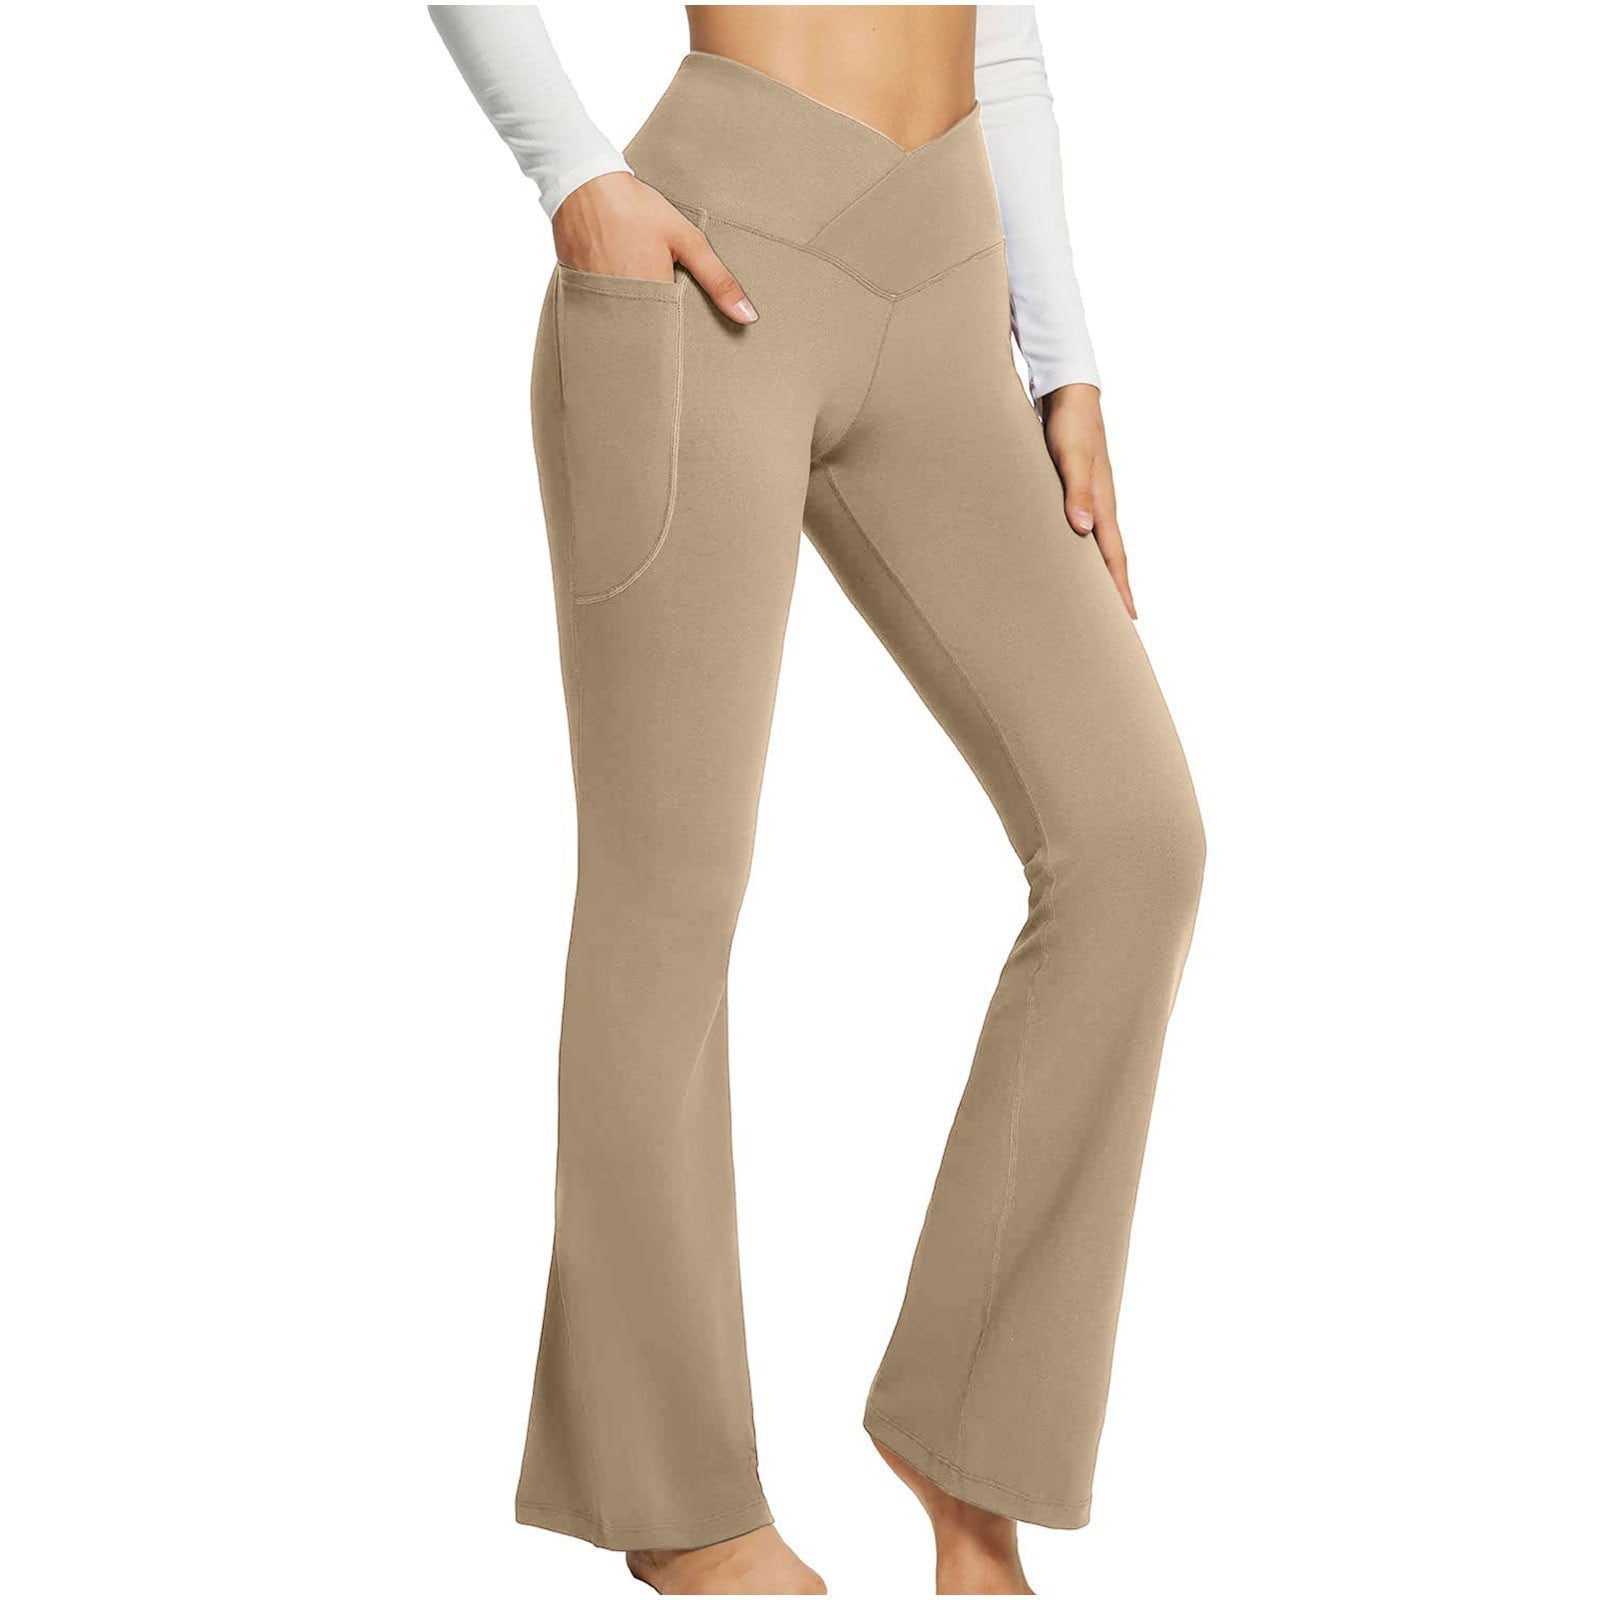 Gubotare Yoga Pants For Women Baggy Sweatpants for Women